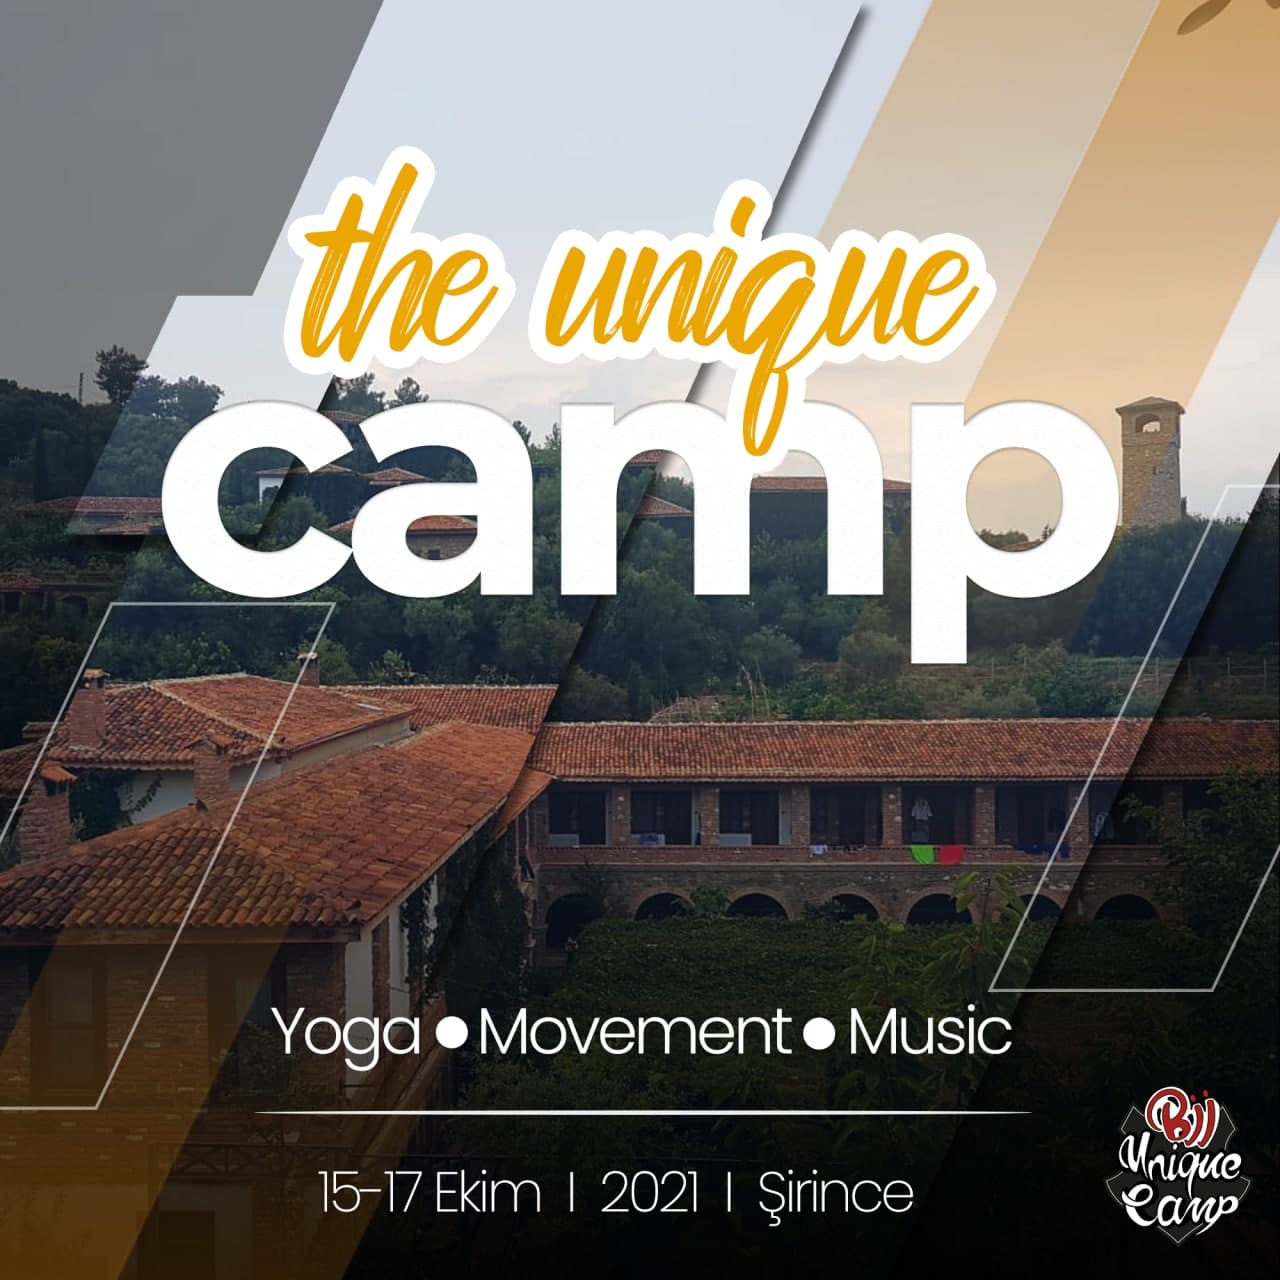 Yoga, Movement, Music 2021